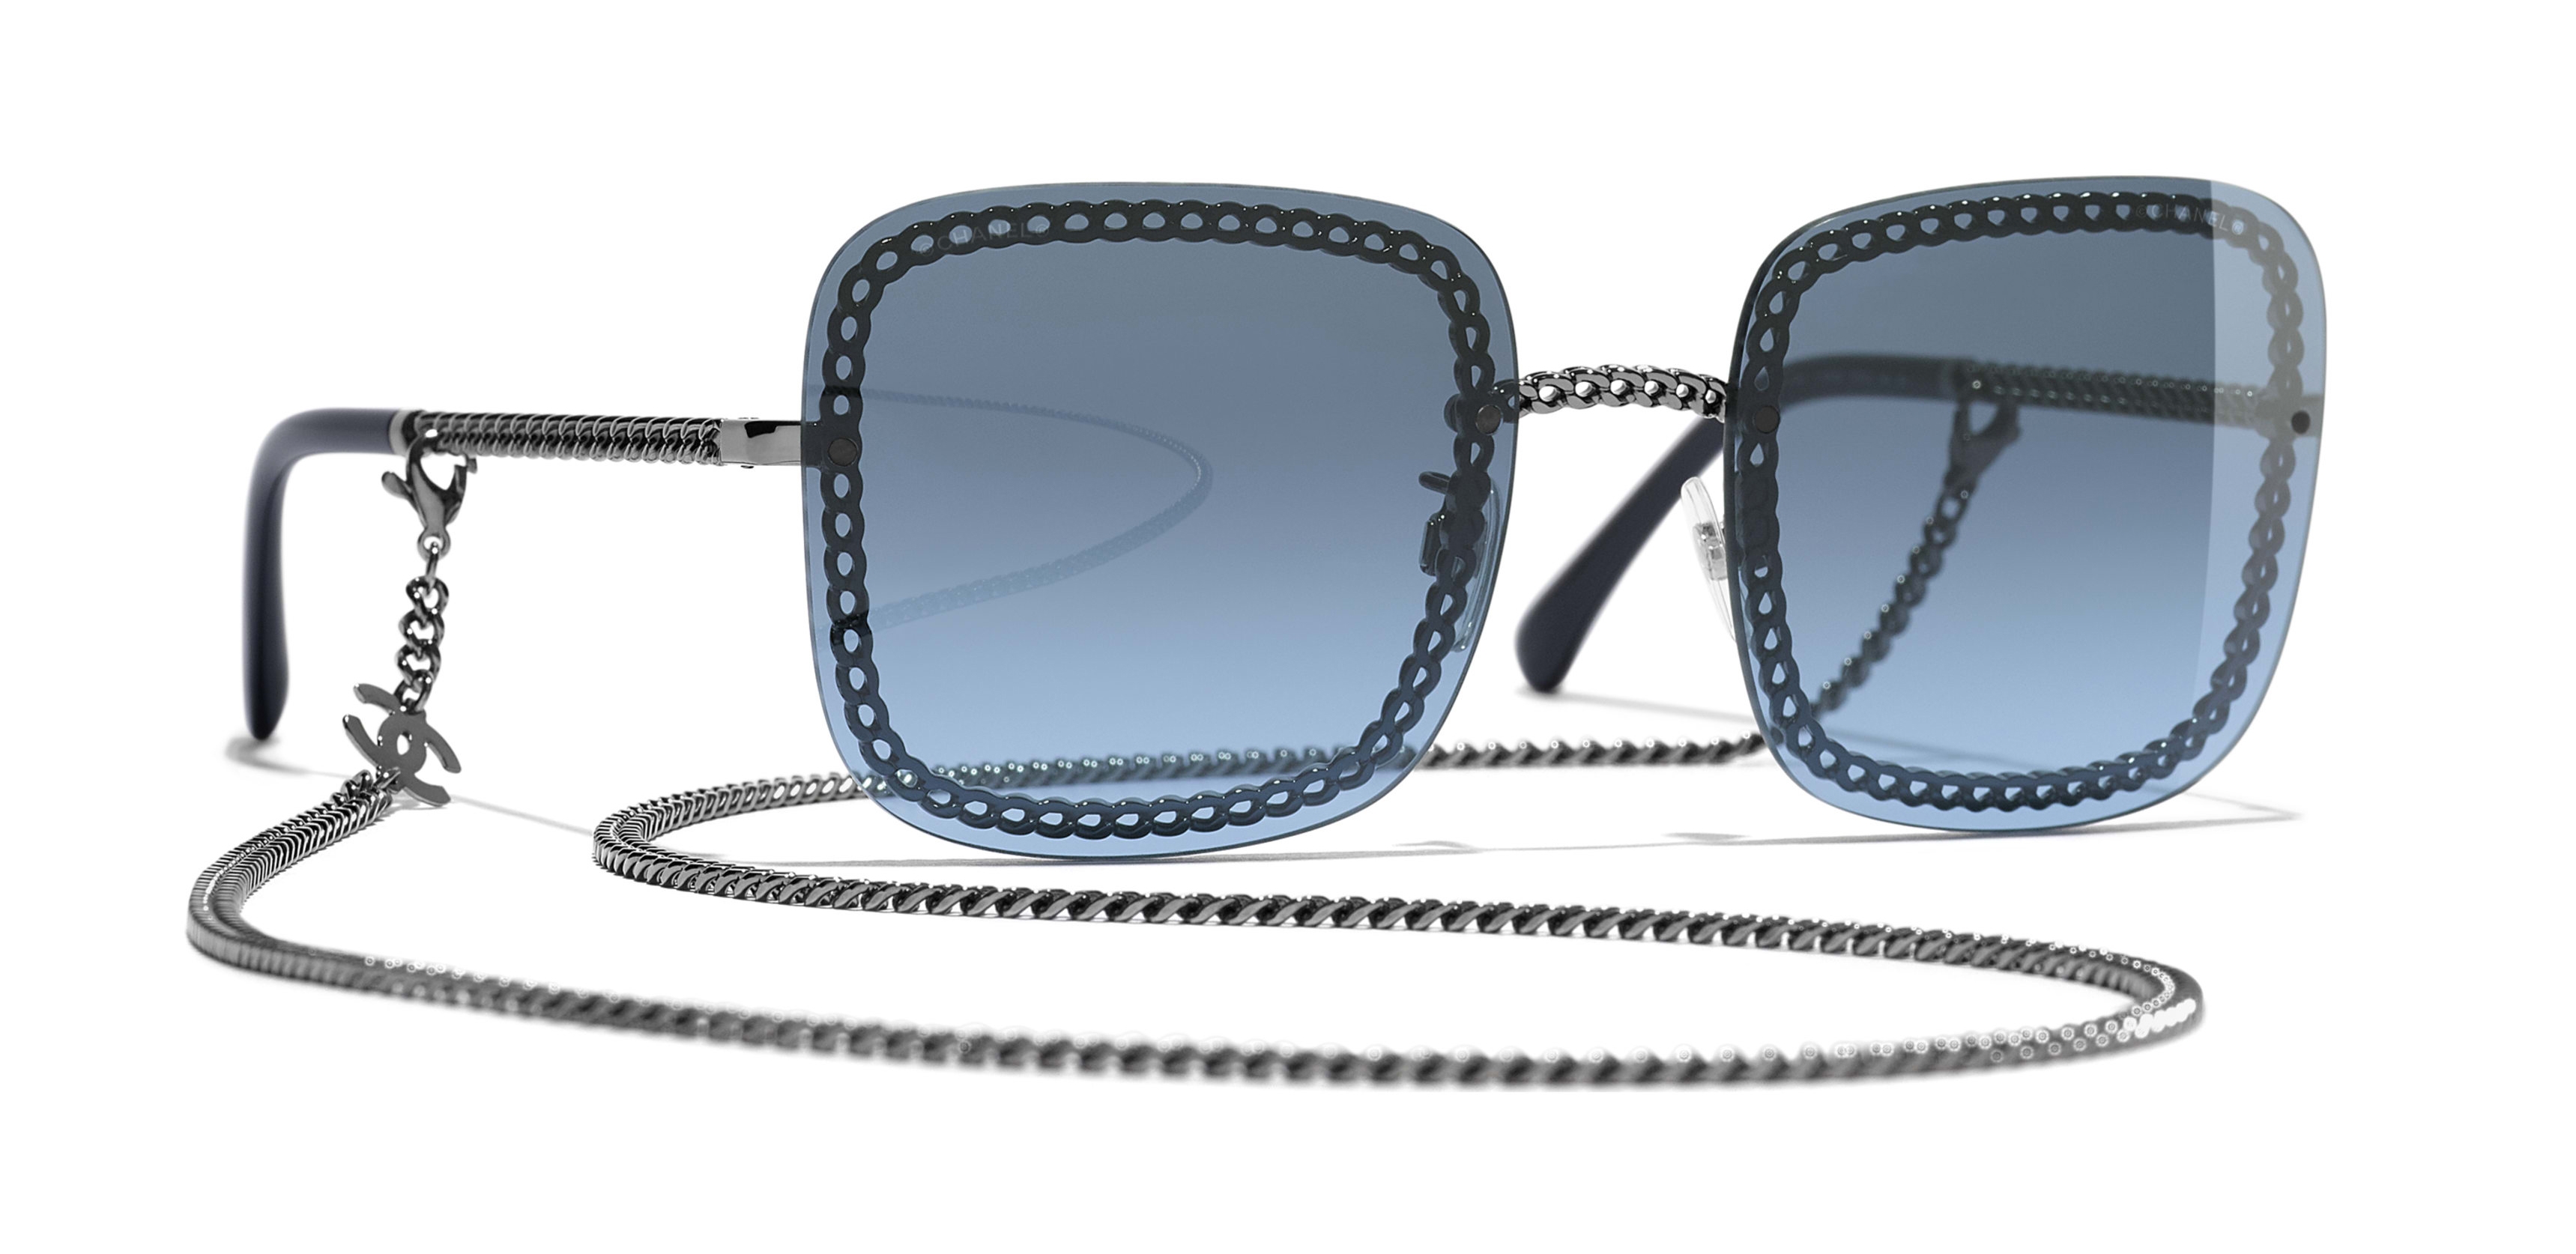 Chanel Square Blue Light Glasses - Acetate, Dark Blue - Polarized - UV Protected - Women's Sunglasses - 3438S 1725/SB